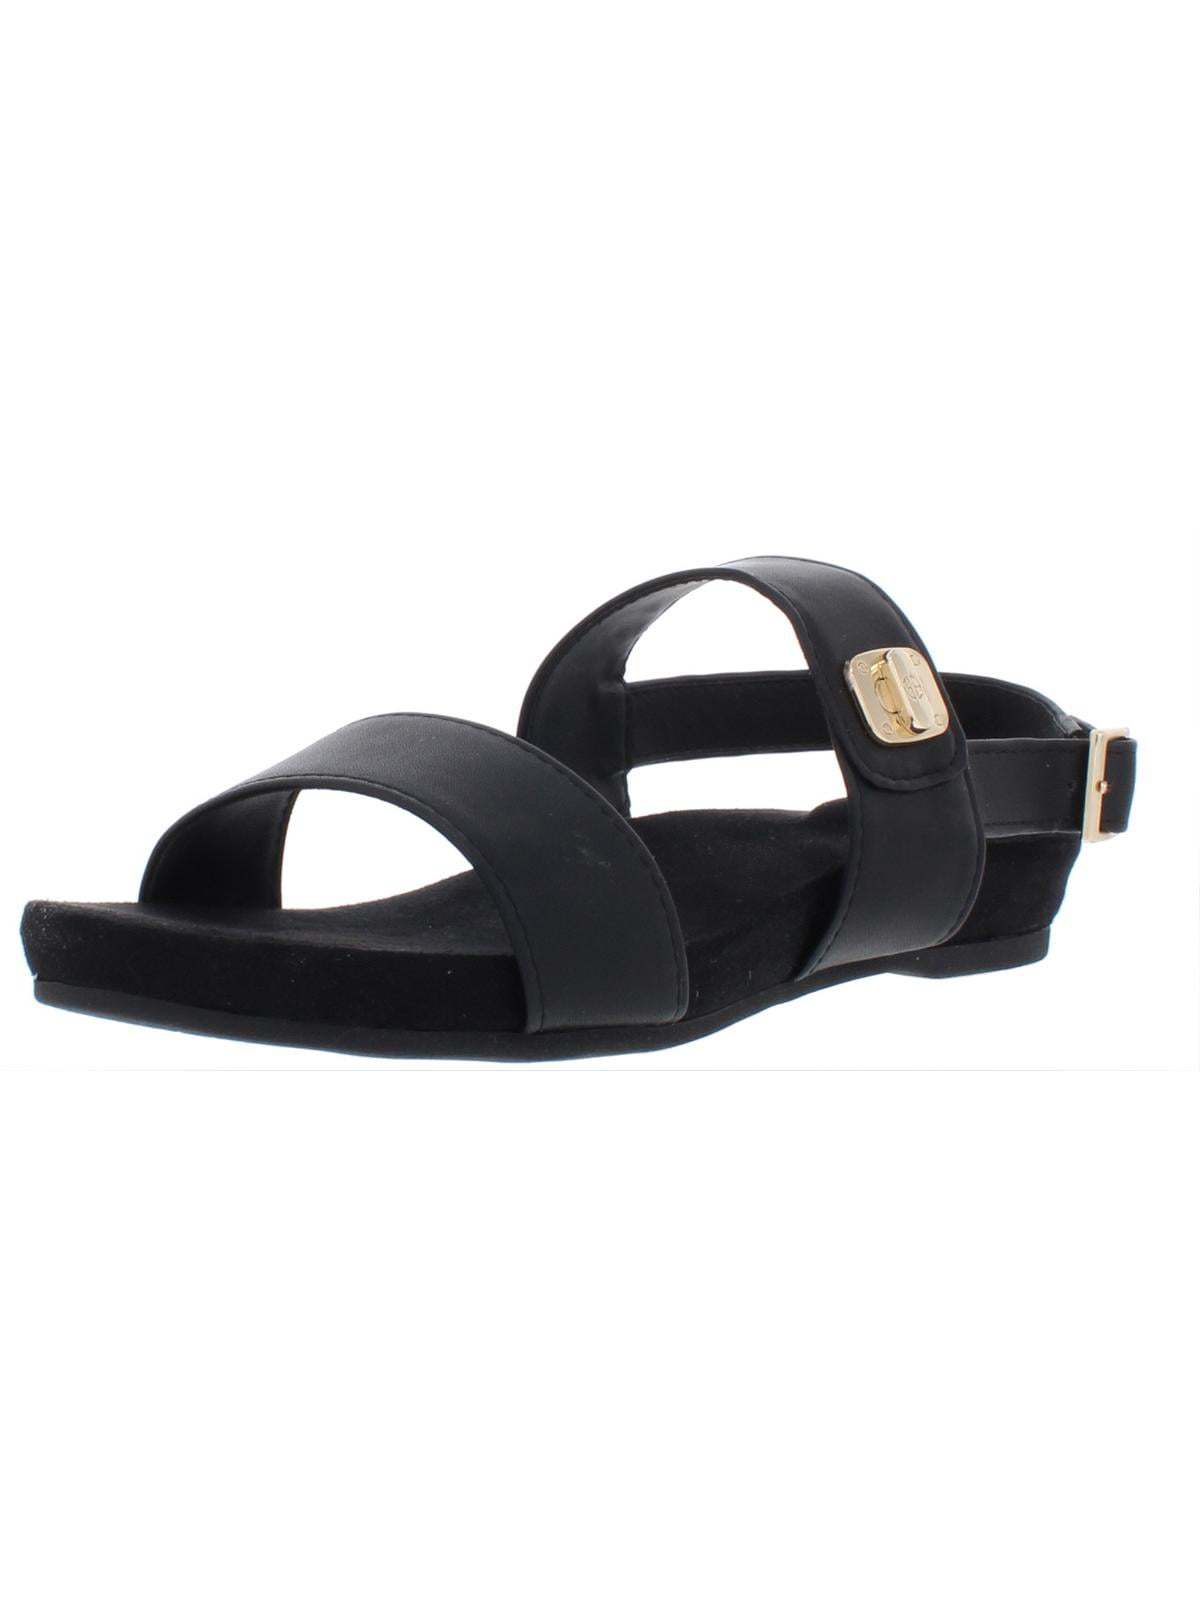 Giani Bernini Womens Ramonaa Faux Leather Strap Sandals Black 8 Medium ...